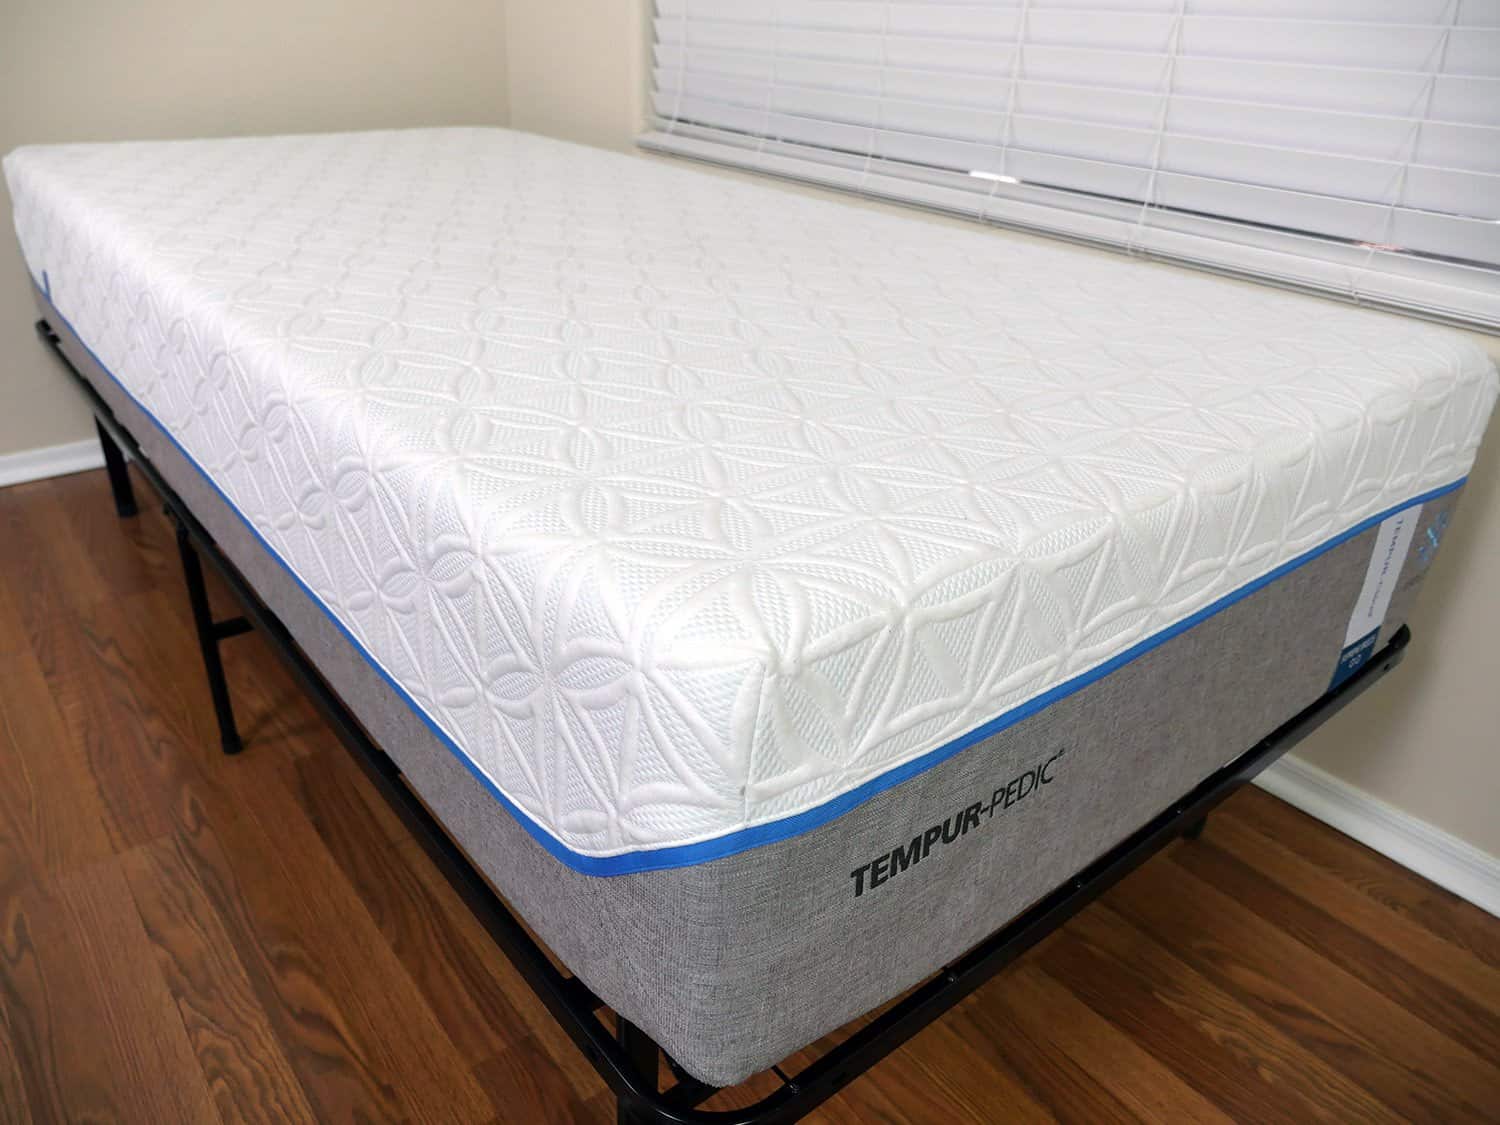 Compare tempurpedic vs latex mattress